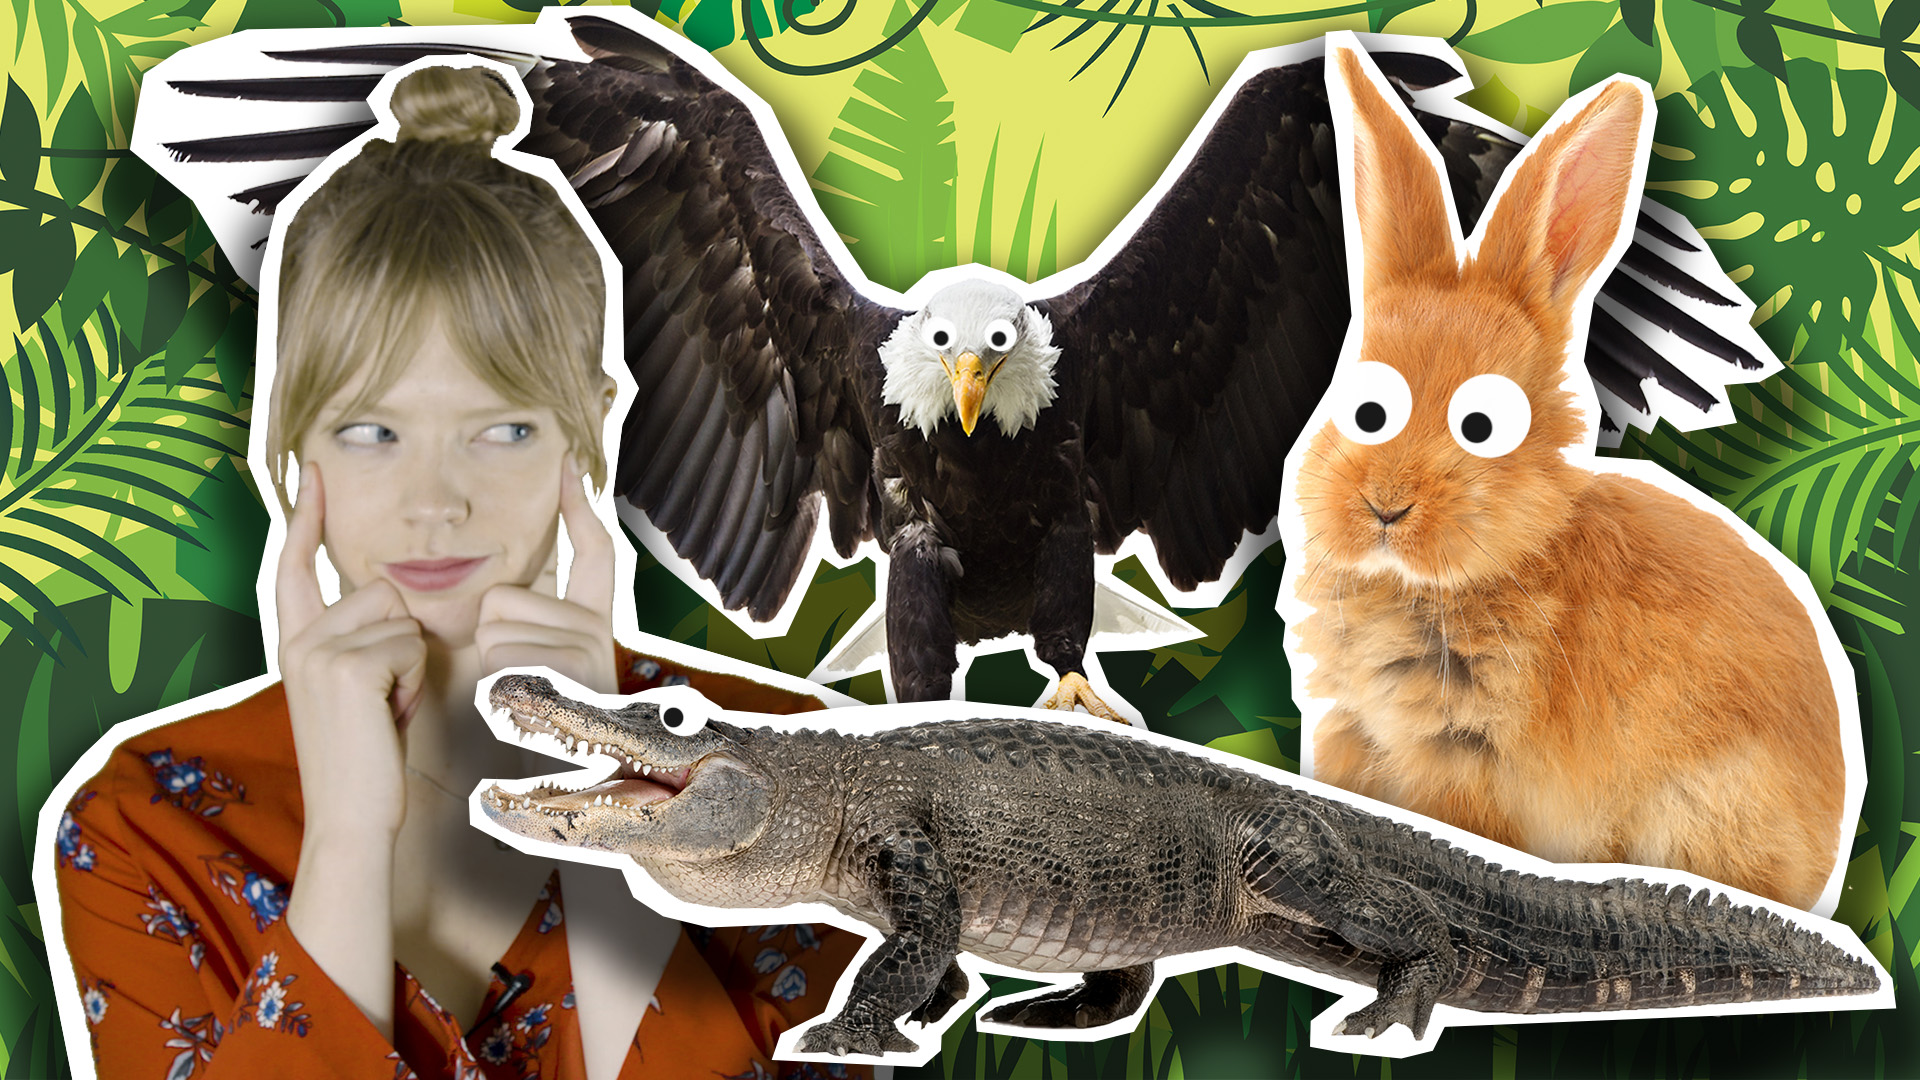 Emma and some animals. A crocodile, eagle and rabbit